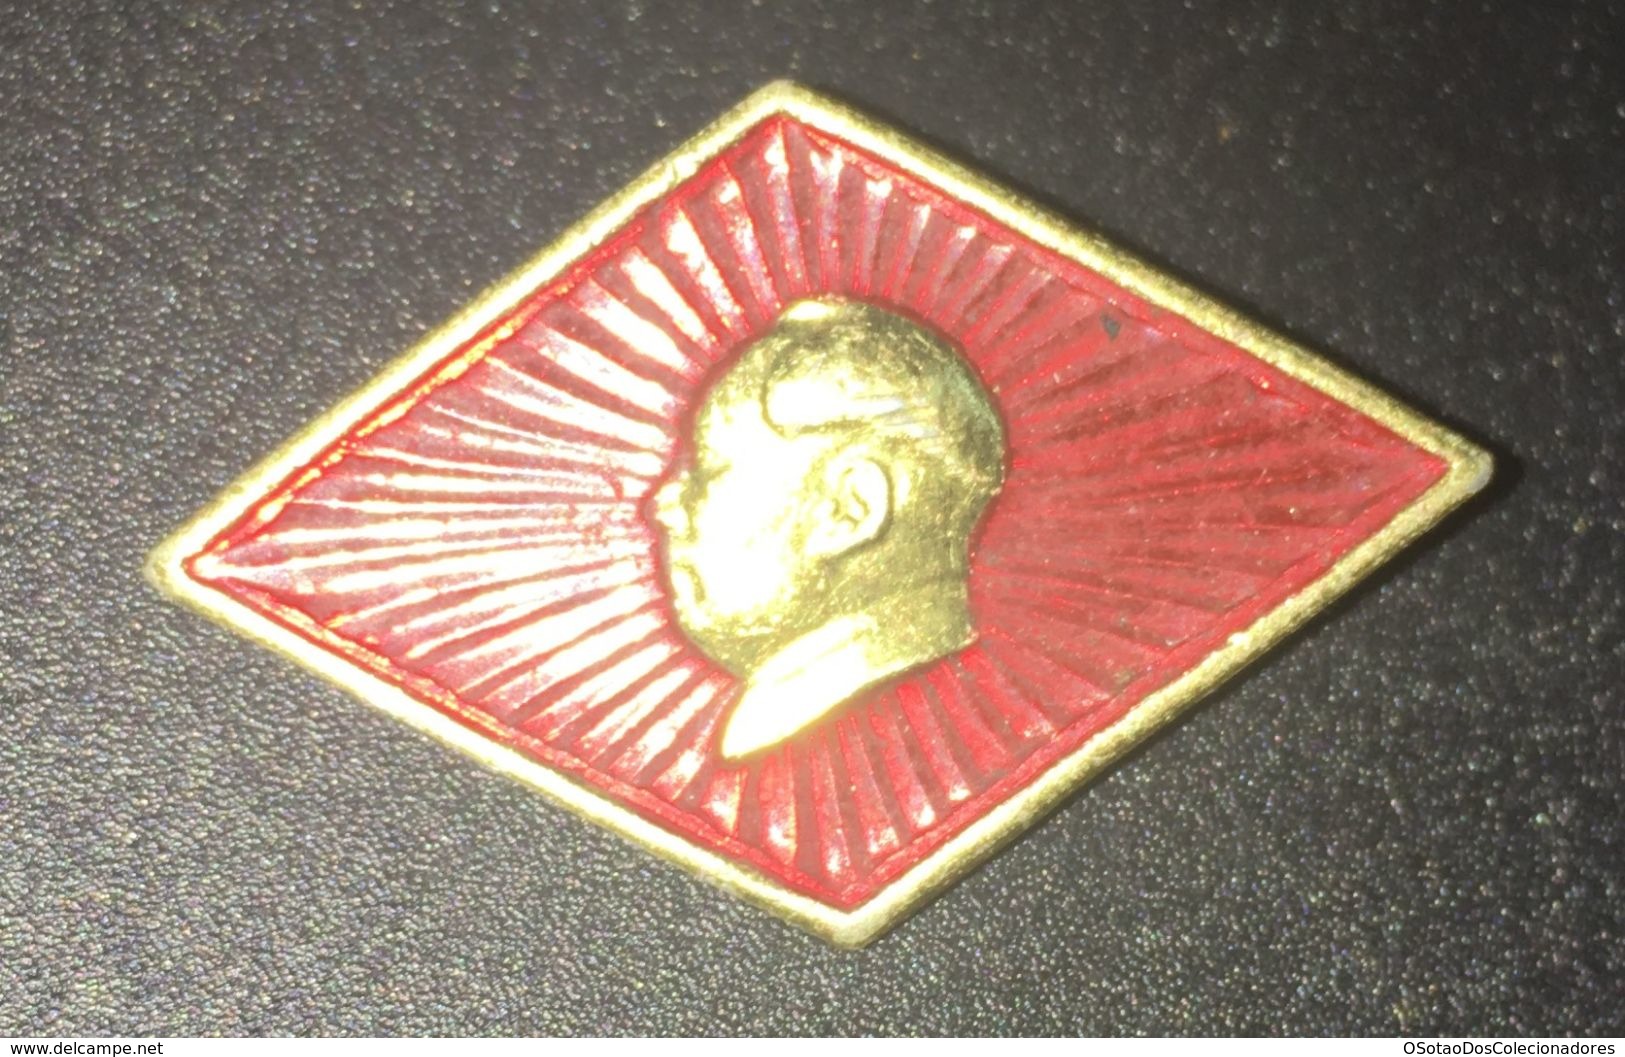 Lot 7 Pin's - China - Chine - Chinese Mao Tsé Tung - Mao Zedong - Chairman China - Vintage Pin Badge